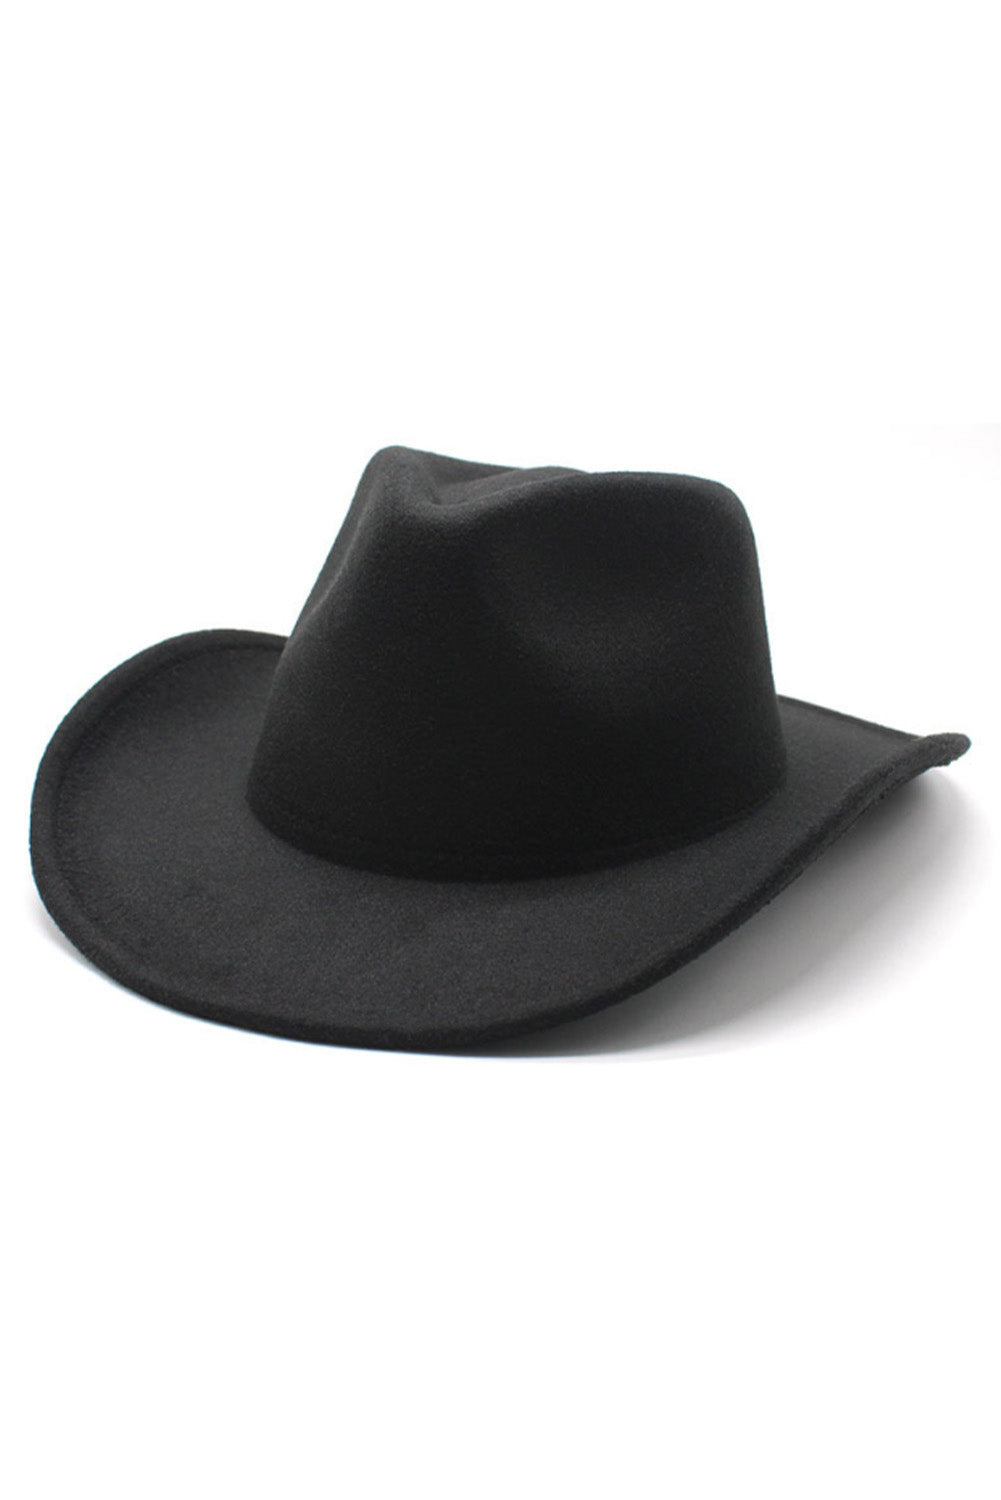 Western Cowboy Wide Brim Hat